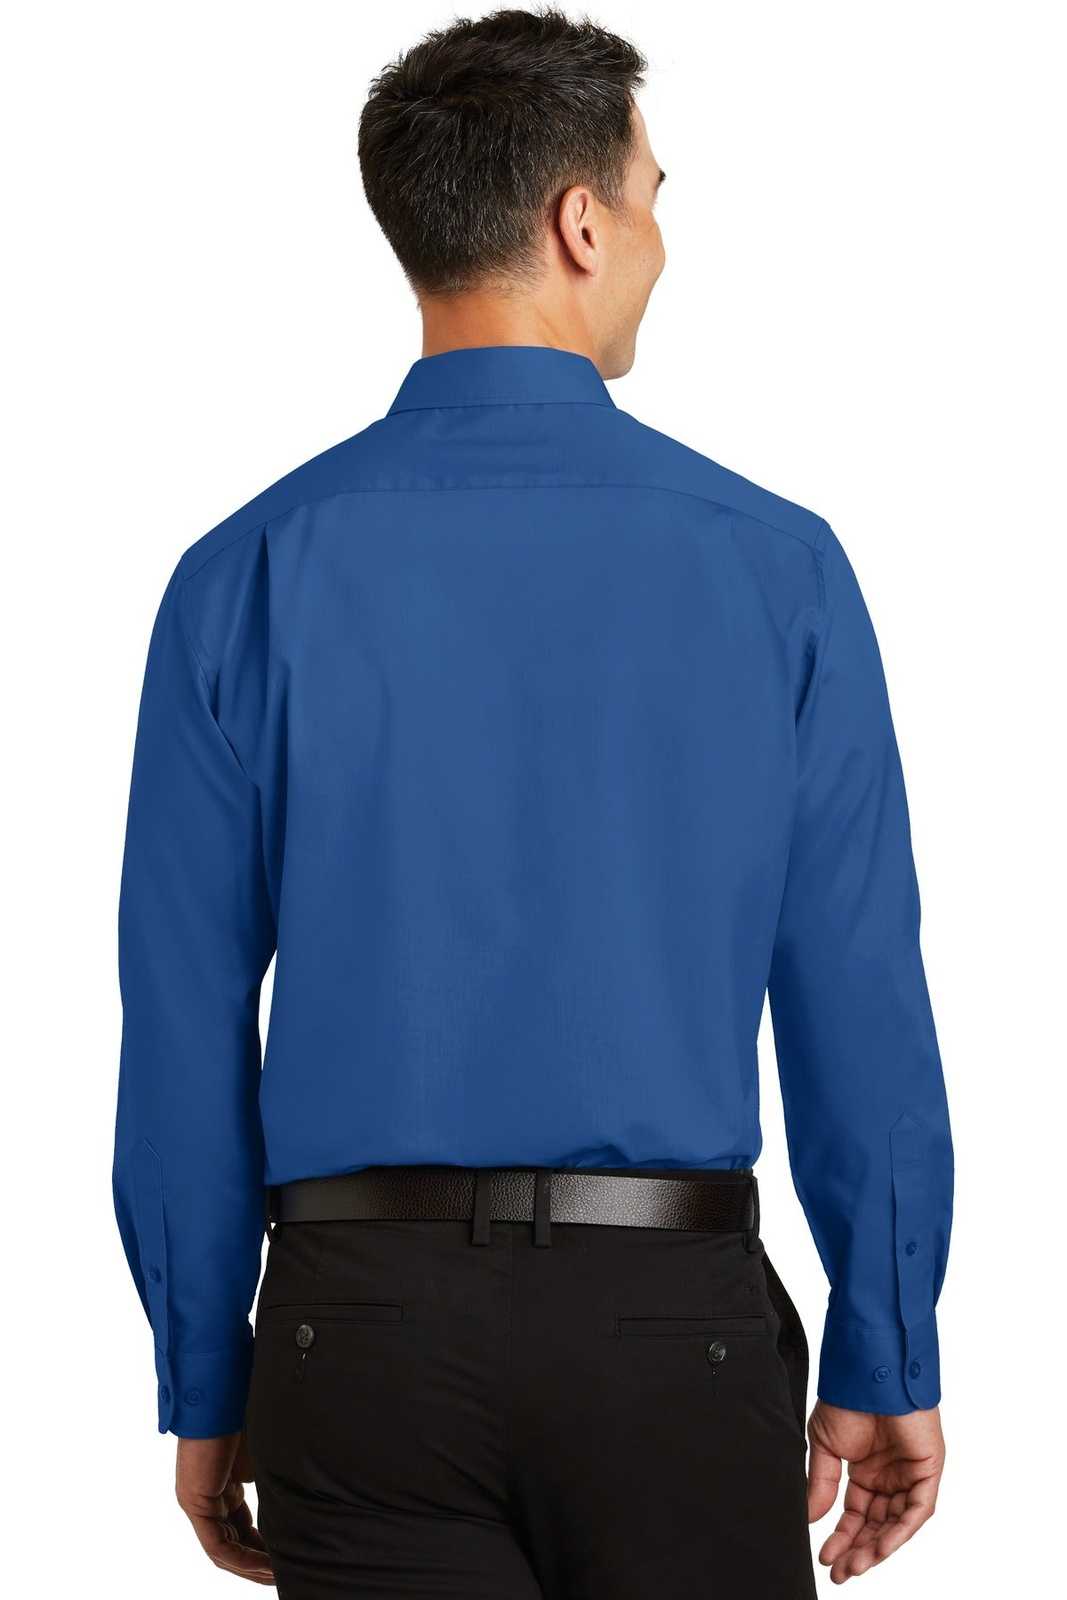 Port Authority TS663 Tall Superpro Twill Shirt - True Blue - HIT a Double - 2